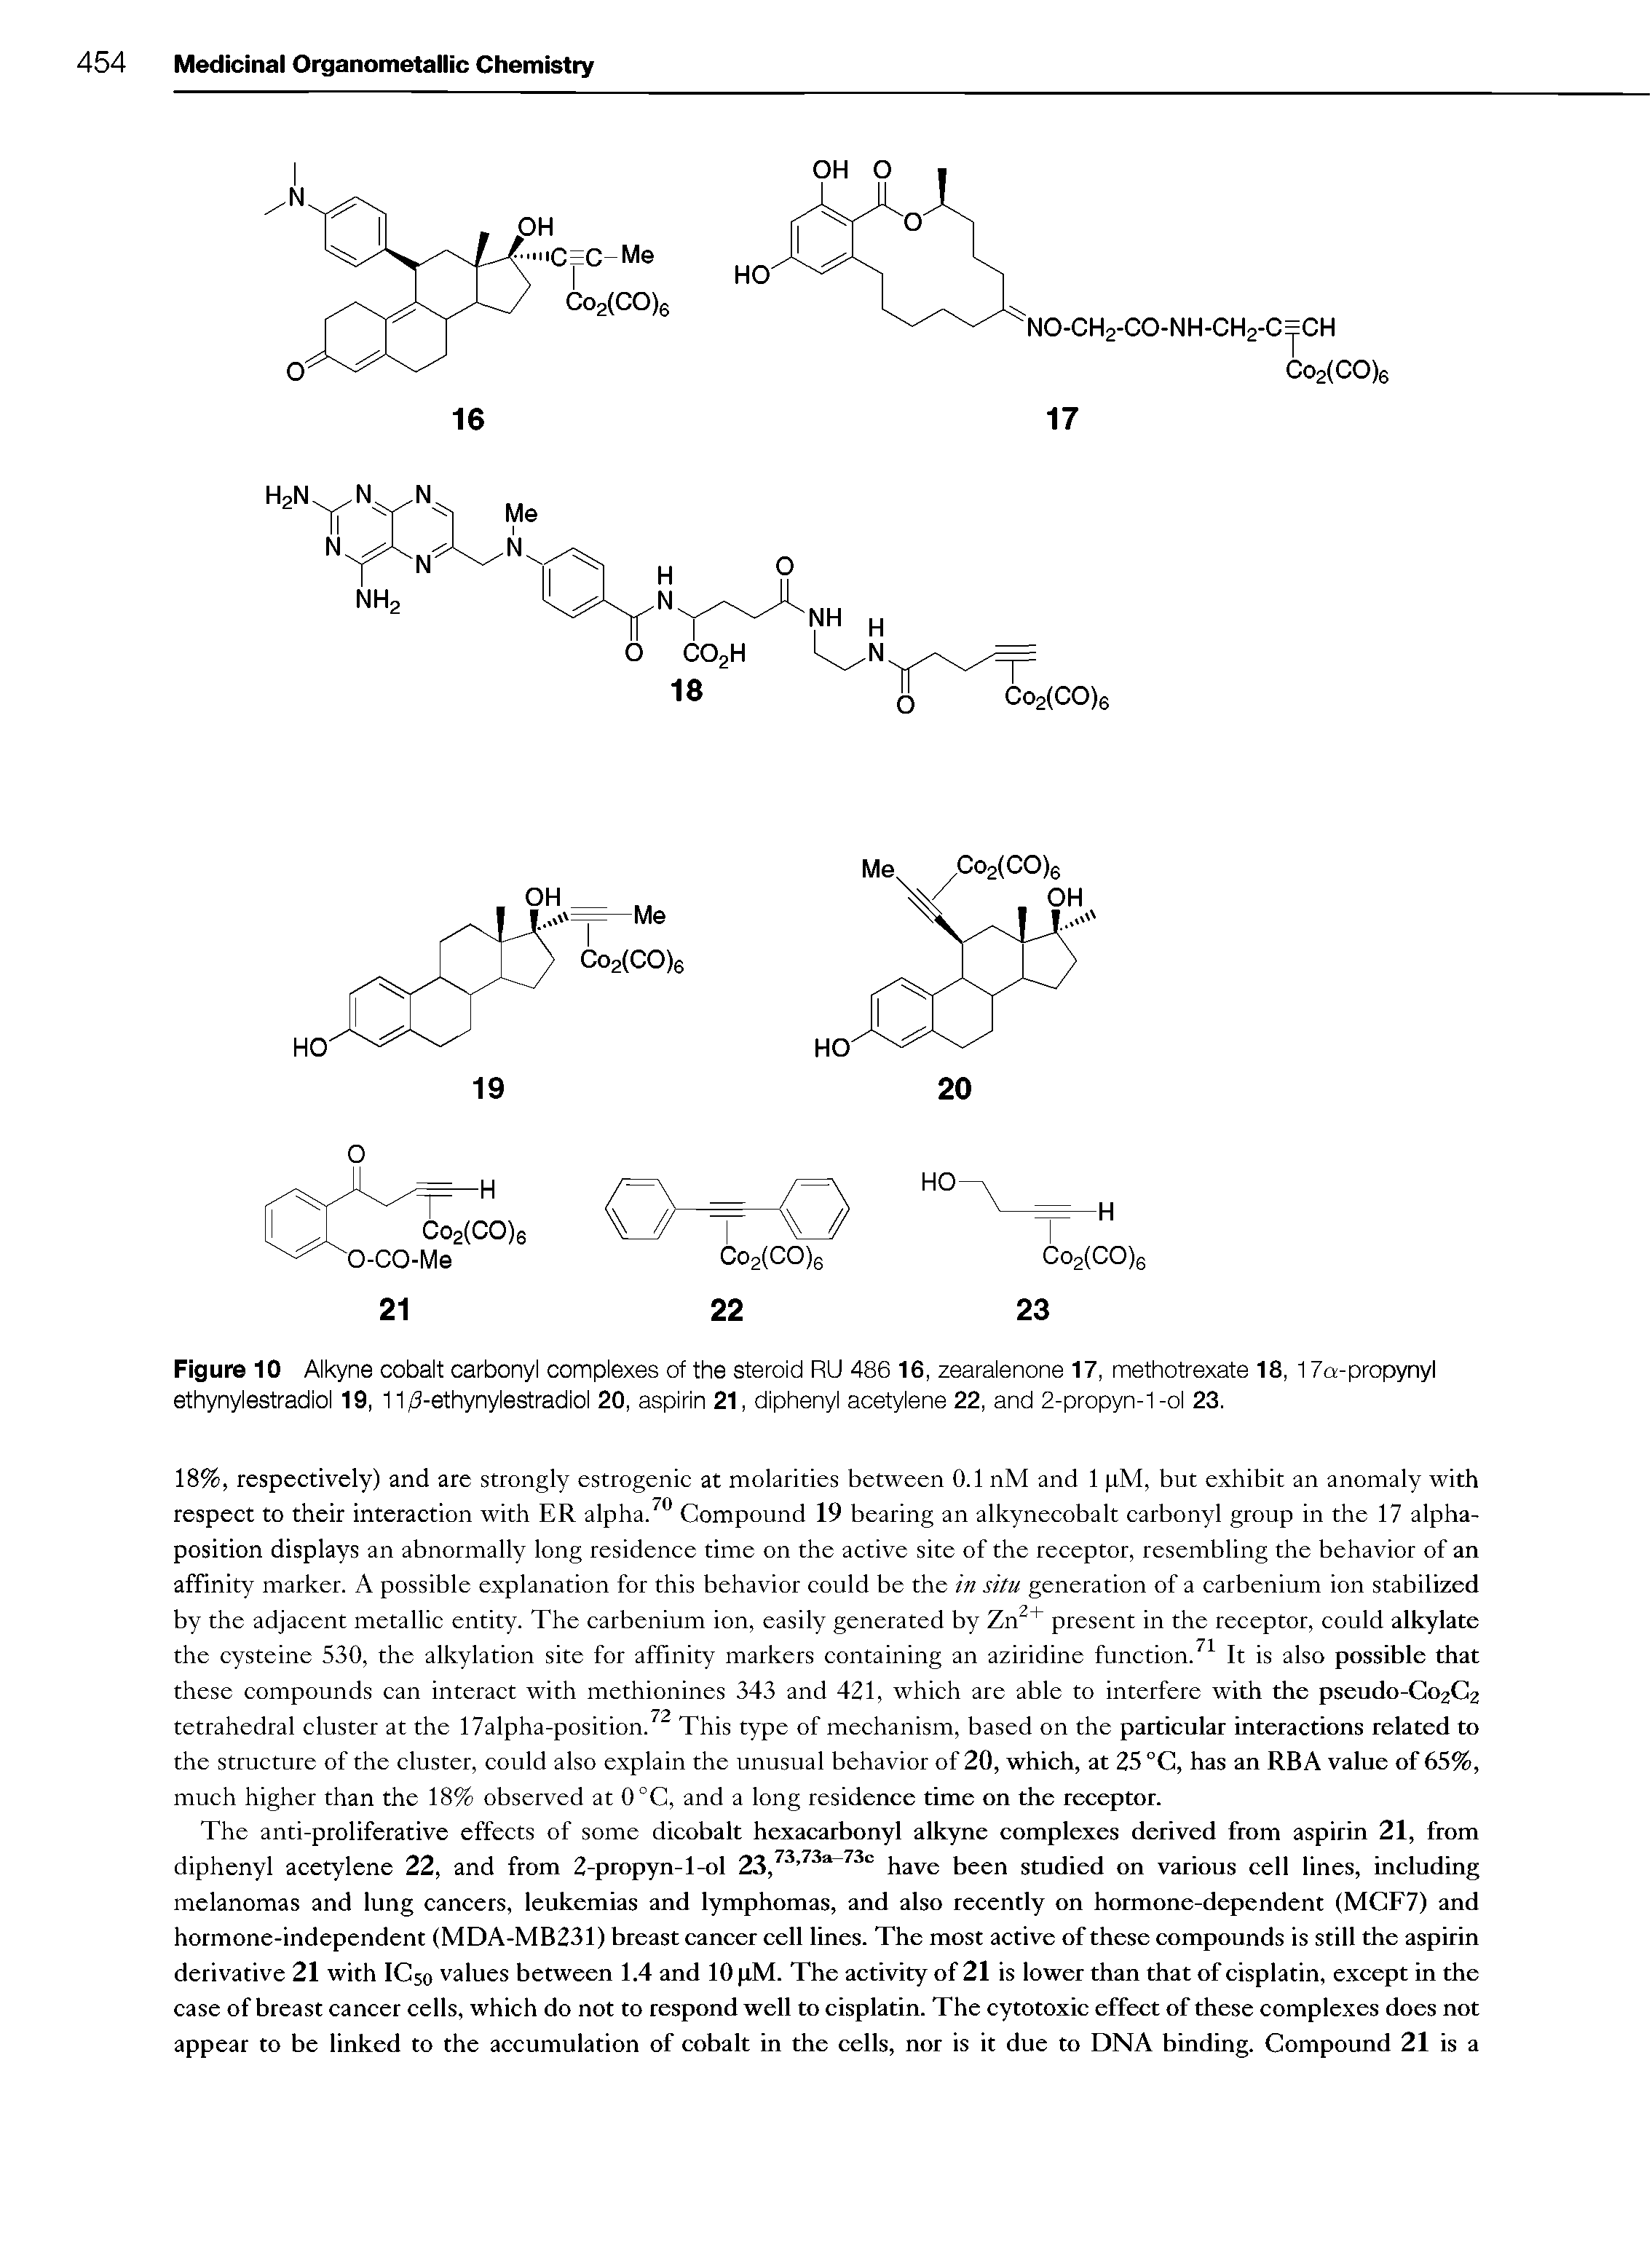 Figure 10 Alkyne cobalt carbonyl complexes of the steroid RU 486 16, zearalenone 17, methotrexate 18, 17a-propynyl ethynylestradlol 19, 11/3-ethynylestradlol 20, aspirin 21, diphenyl aoetylene 22, and 2-propyn-1-ol 23.